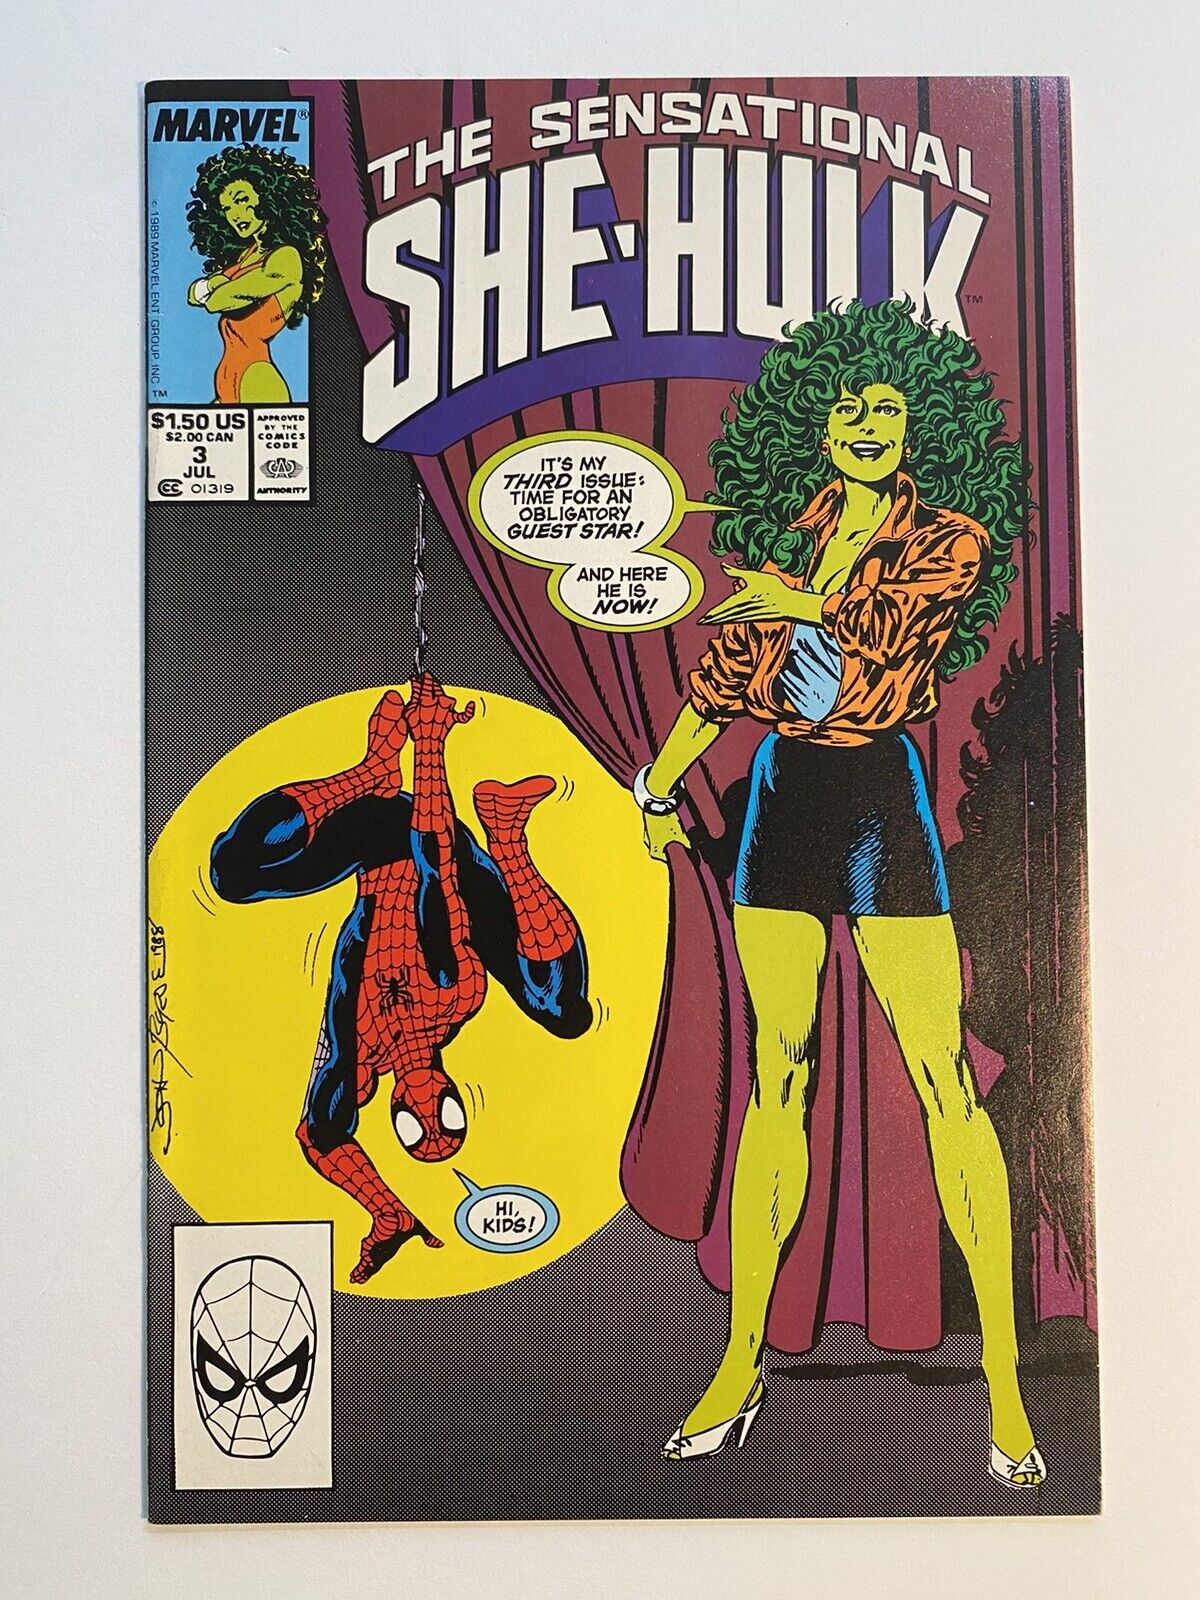 THe Sensational She-Hulk #3 | Spider-man | John Byrne MCU Disney + High Grade